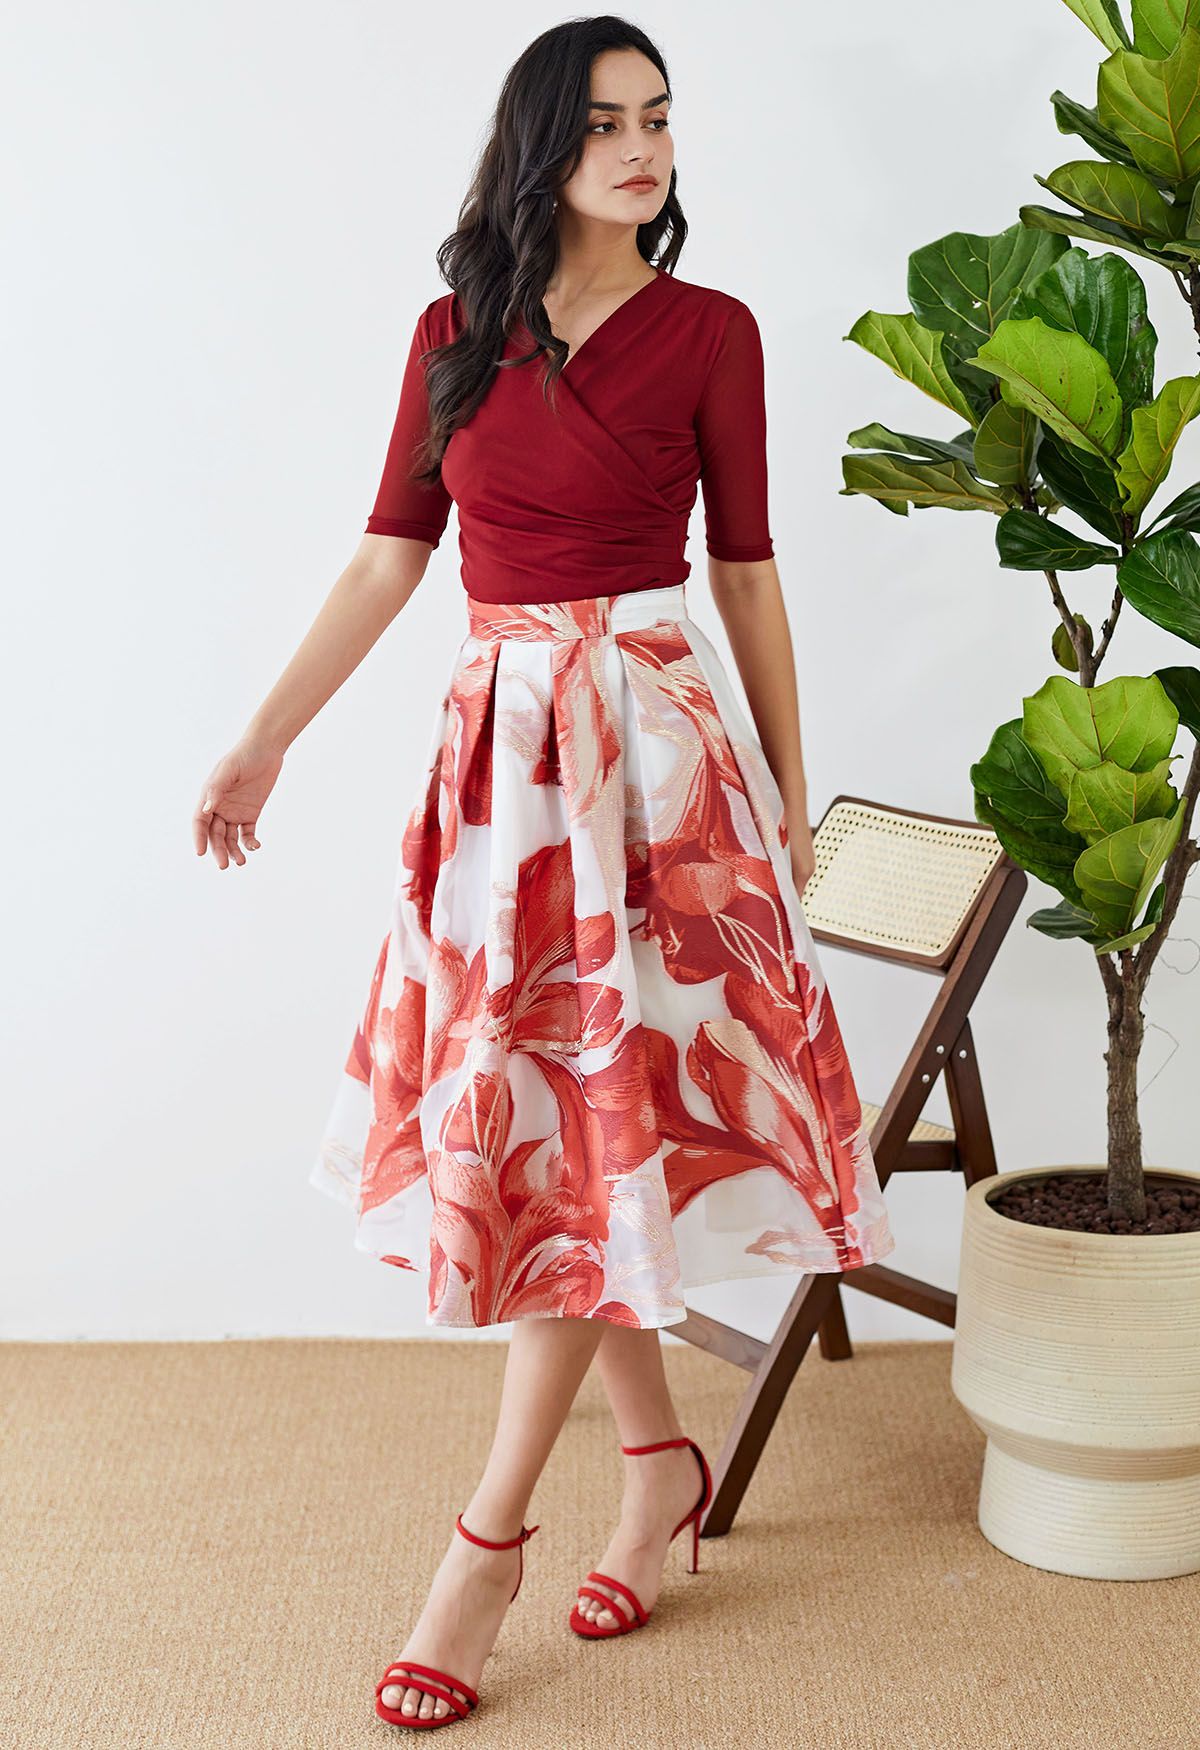 Artistic Floral Jacquard Organza Pleated Midi Skirt in Red - Retro